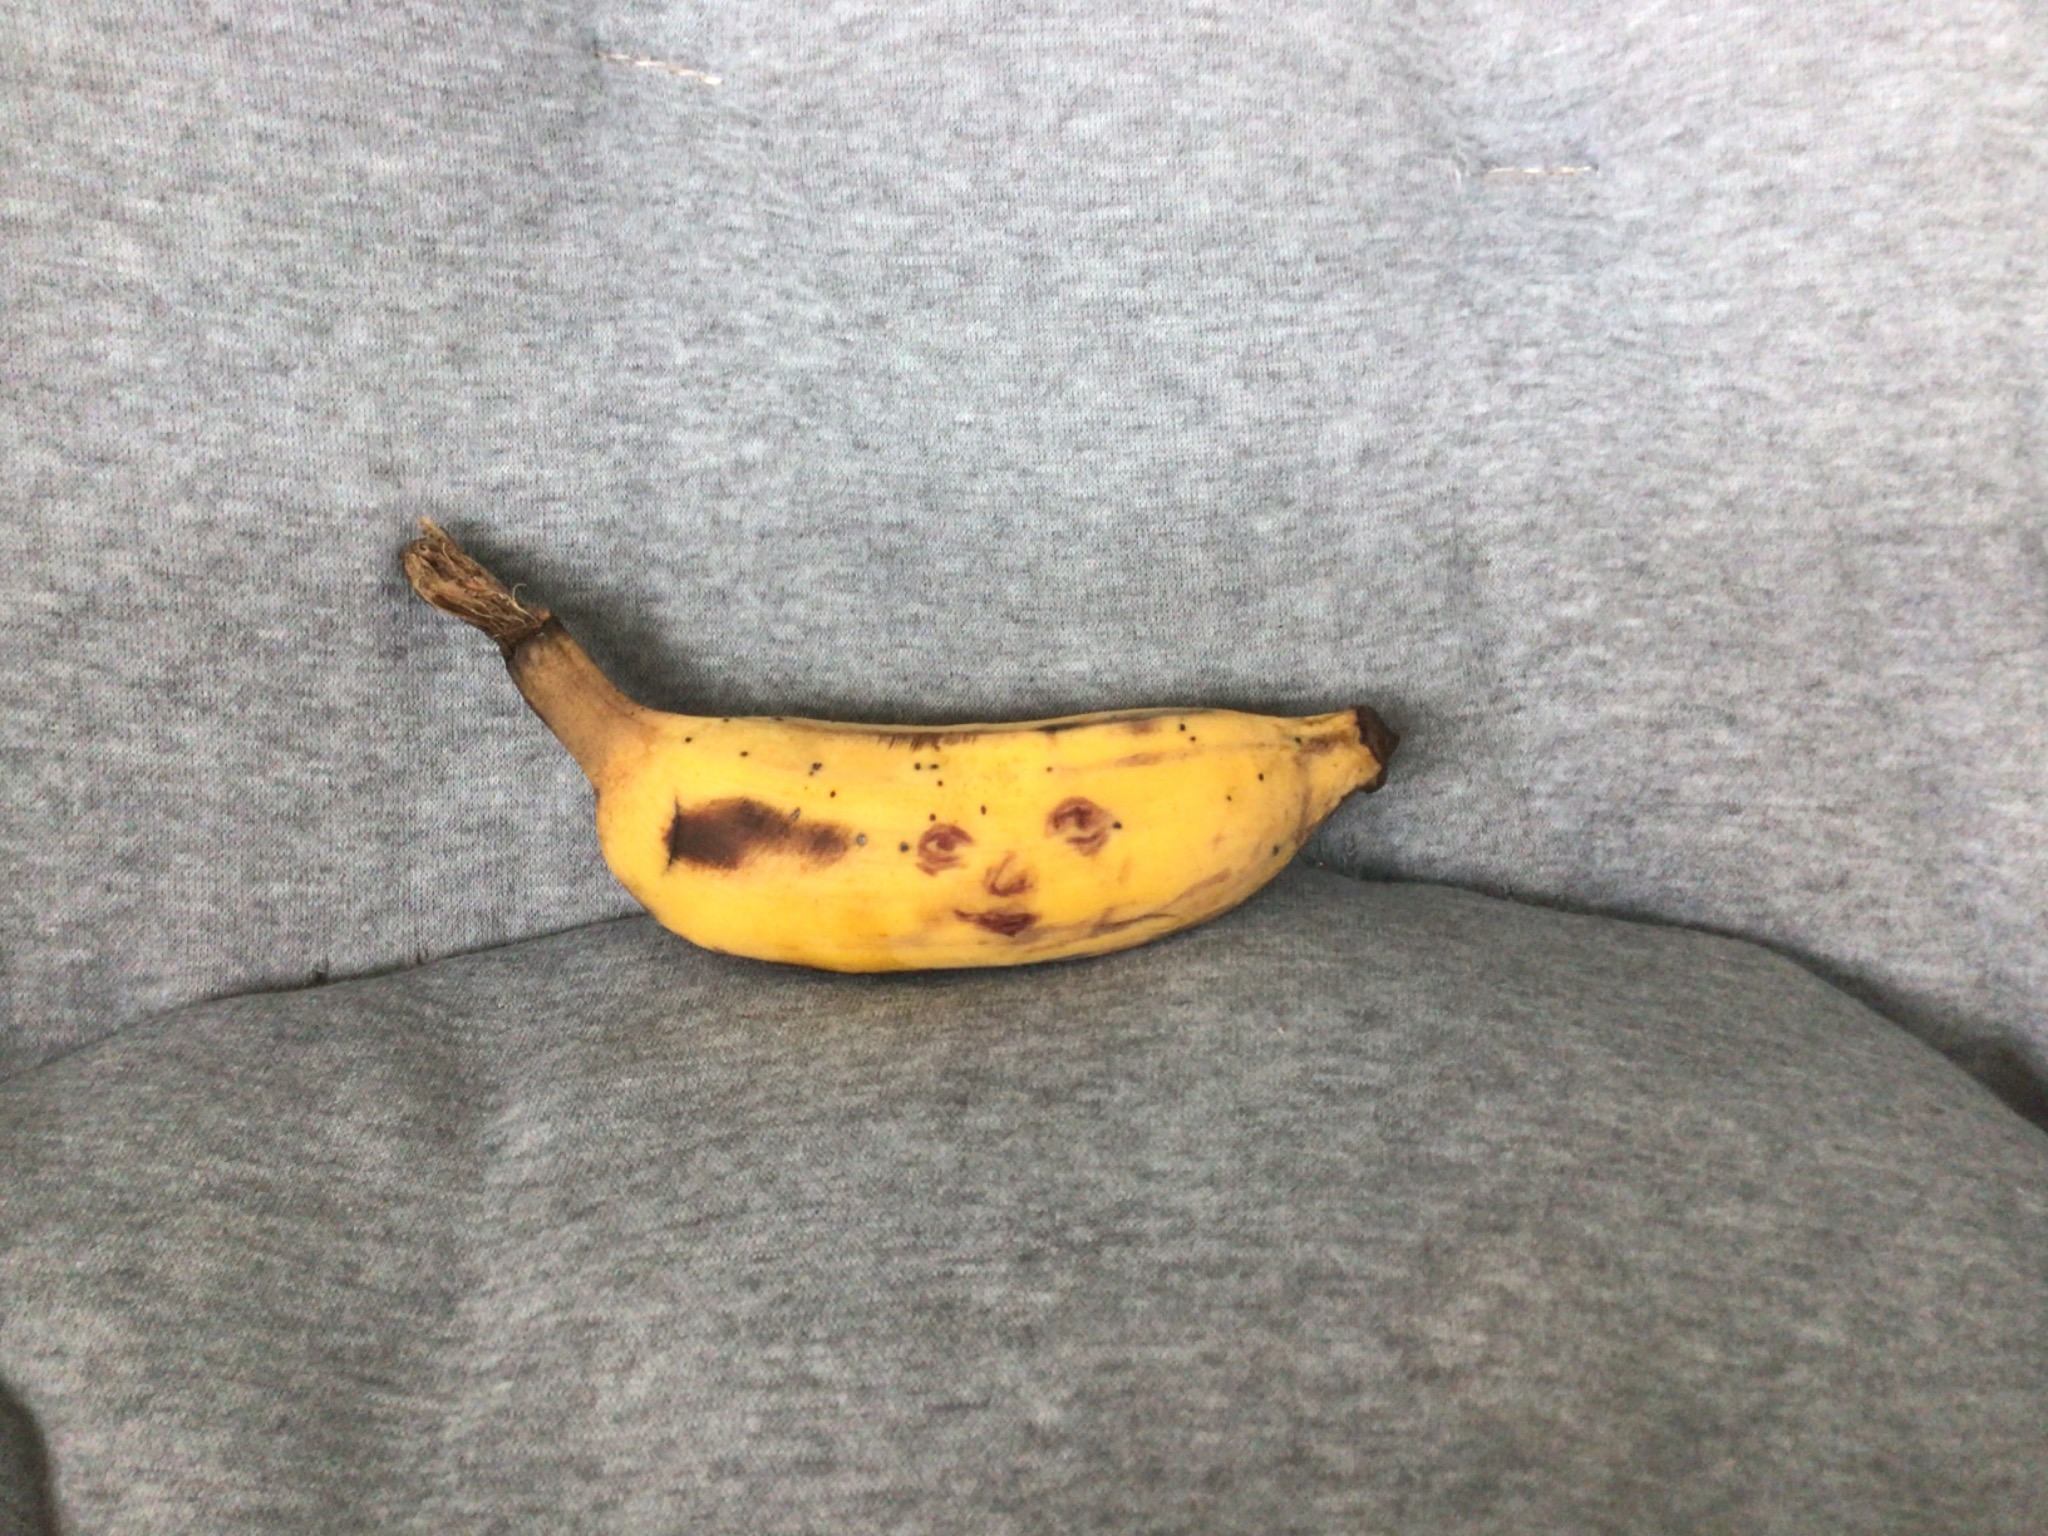 This banana will hopefully haunt u